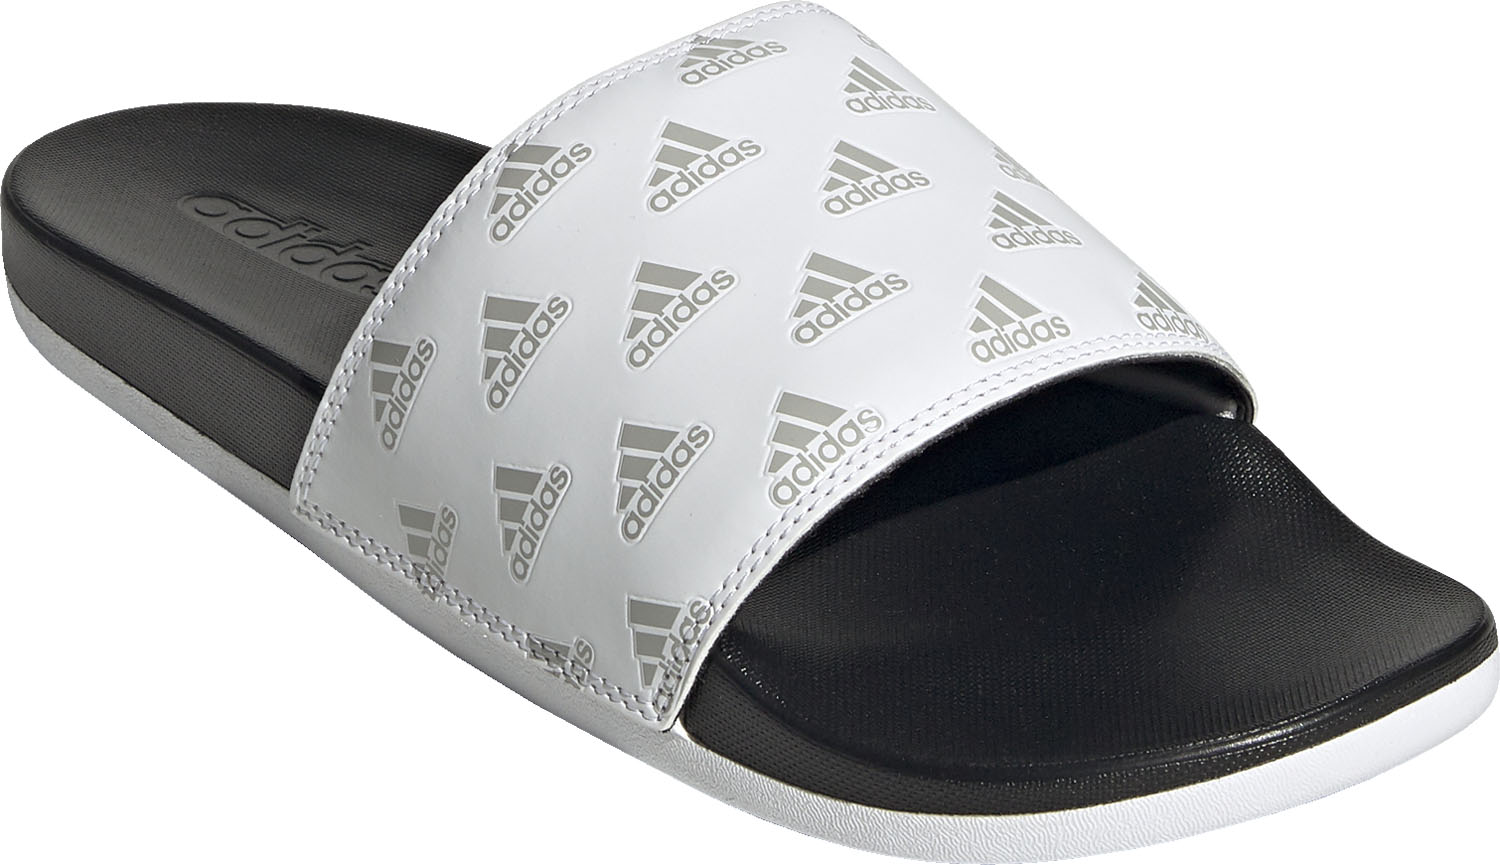 adidas (アディダス) トレーニング・フィットネス 靴・シューズ アディレッタ コンフォート サンダル サンダル プール 海 【フットウェアホワイト/グレーツー/フットウェアホワイト】 白 GV9737 メンズ・レディース 男性用・女性用 {SK}